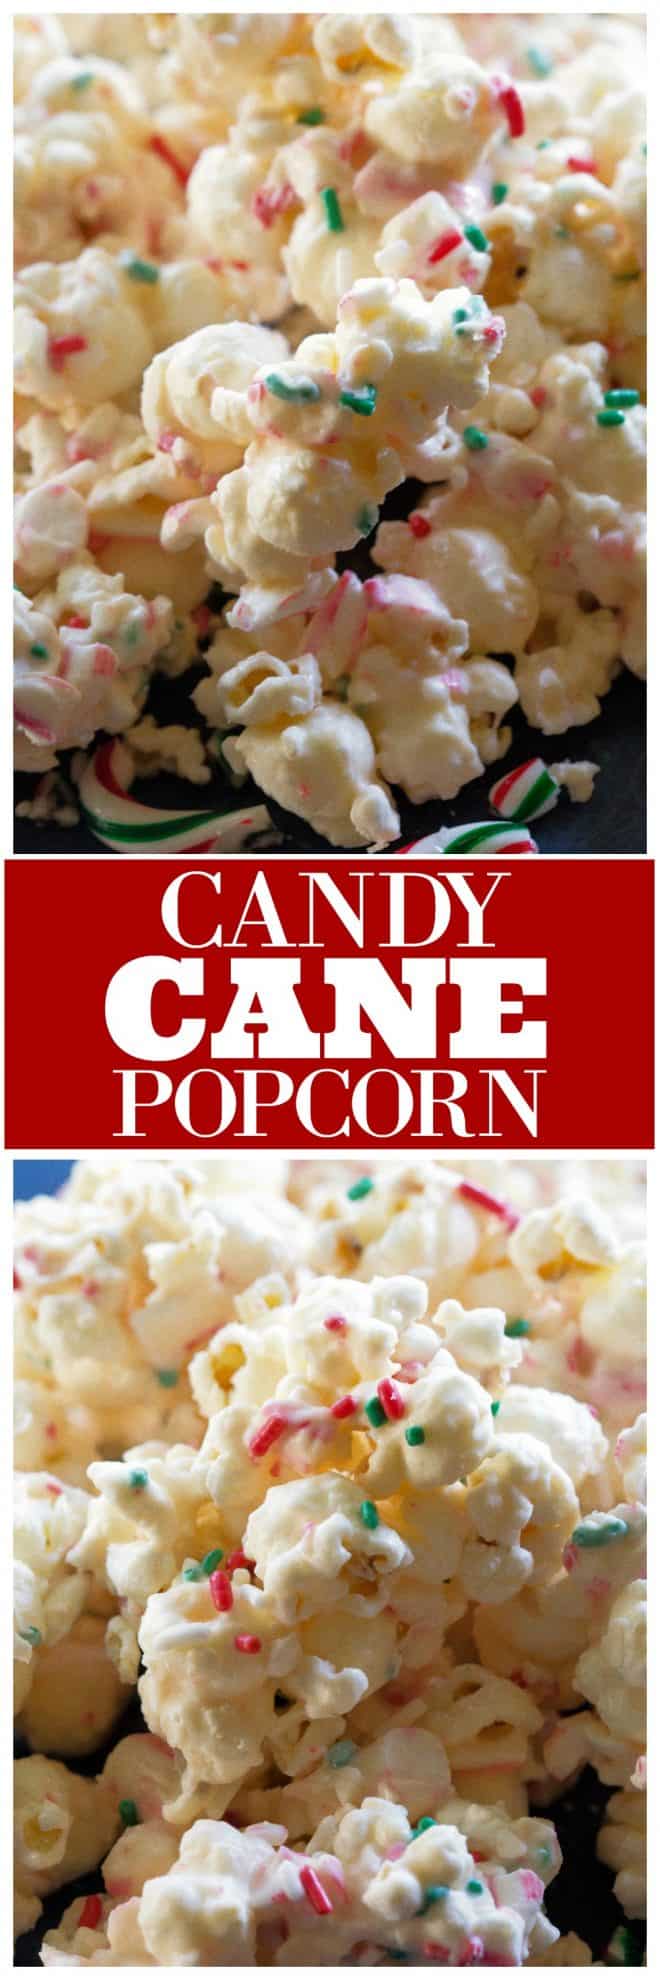 candy cane popcorn - Candy Cane Popcorn